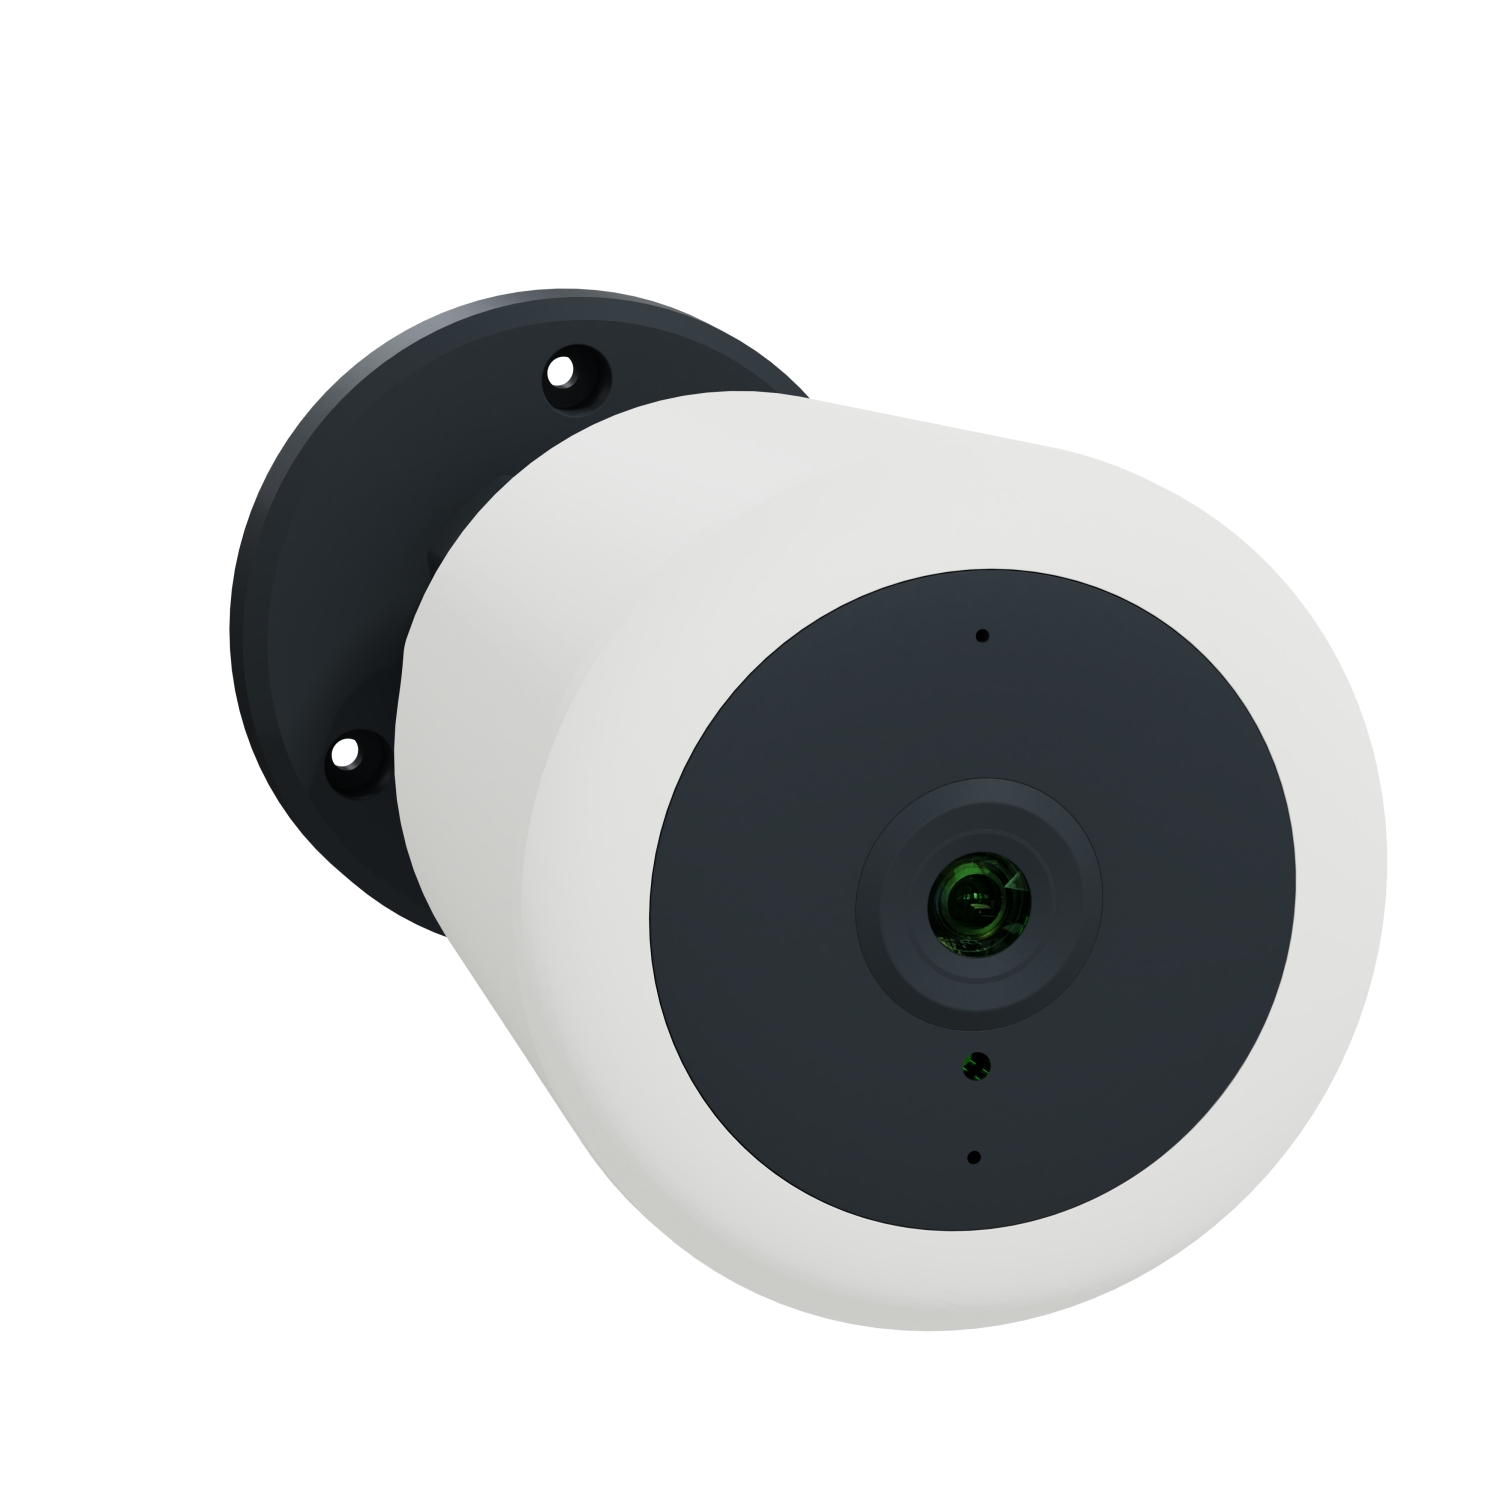 PDL724419 - PDL Wiser Outdoor Wi-Fi IP Camera